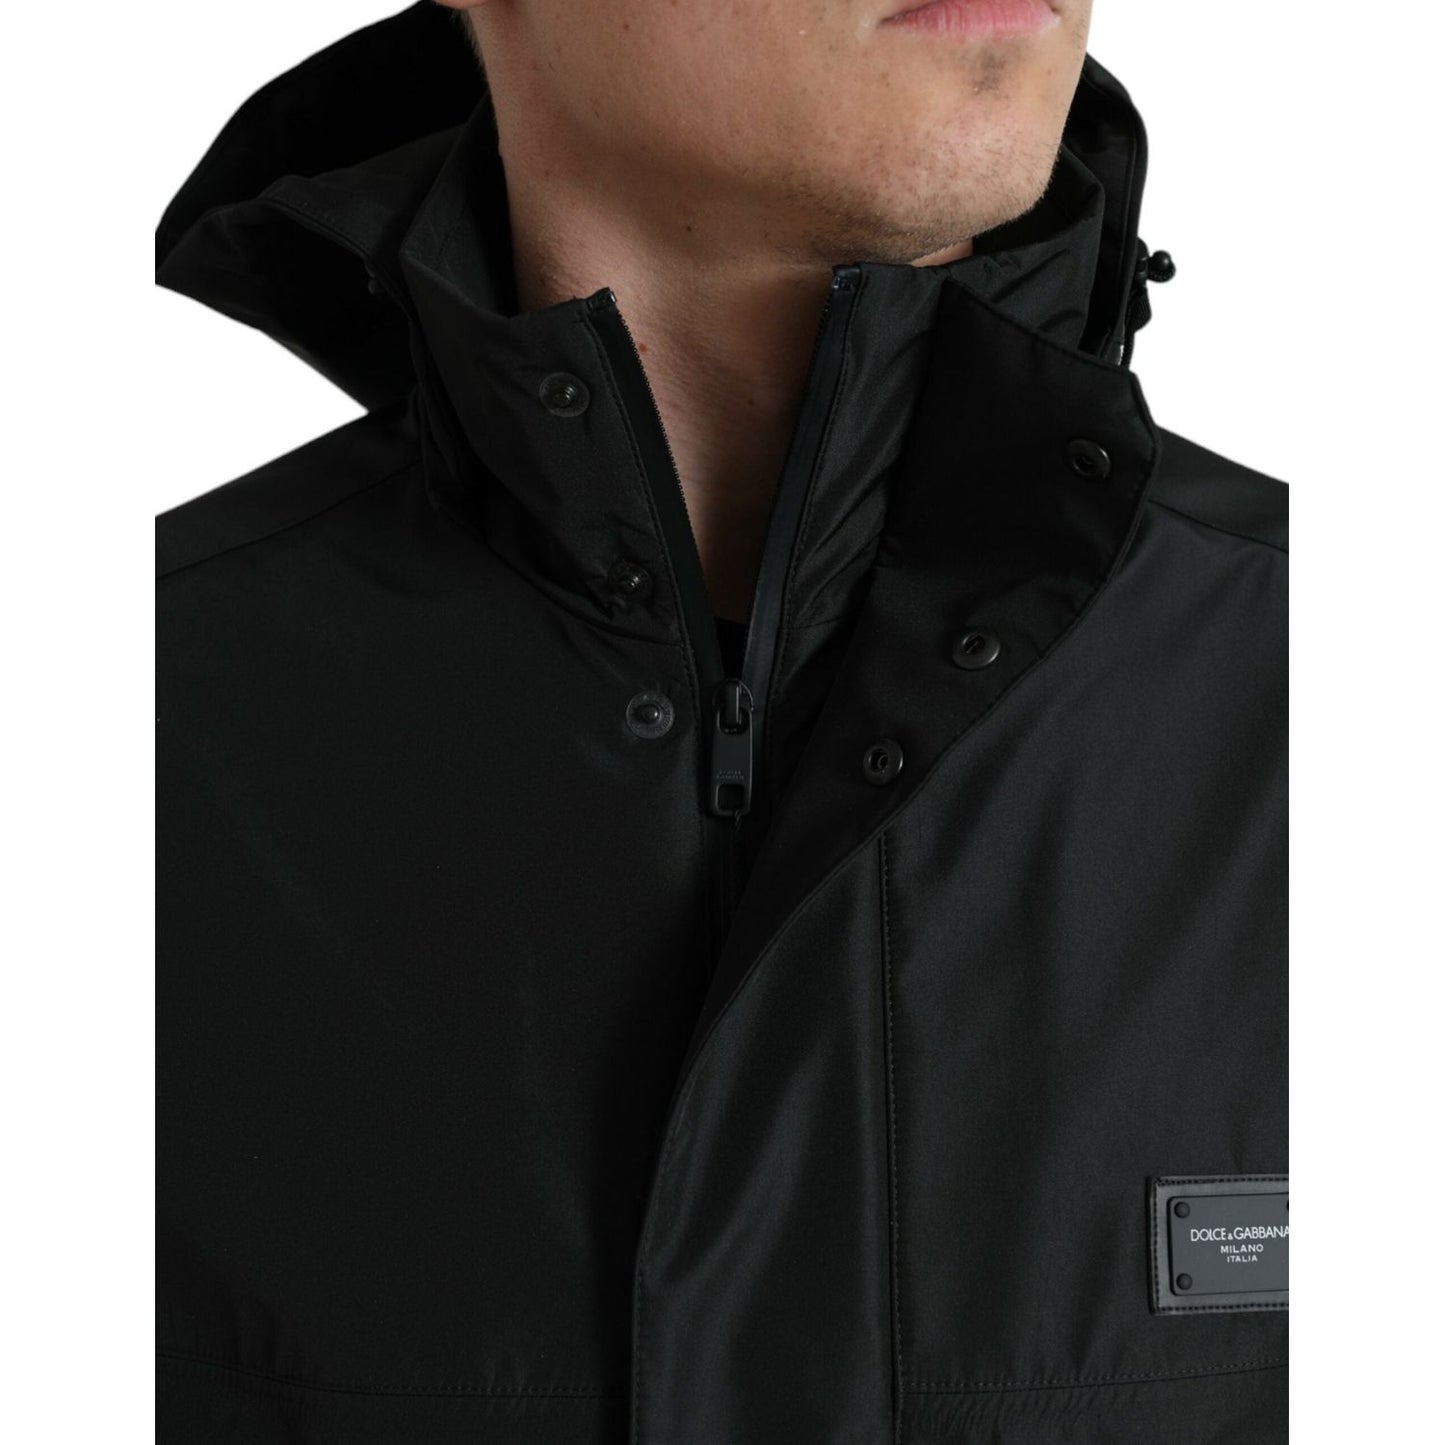 Dolce & Gabbana Sleek Black Windbreaker Jacket black-polyester-logo-plaque-hooded-jacket